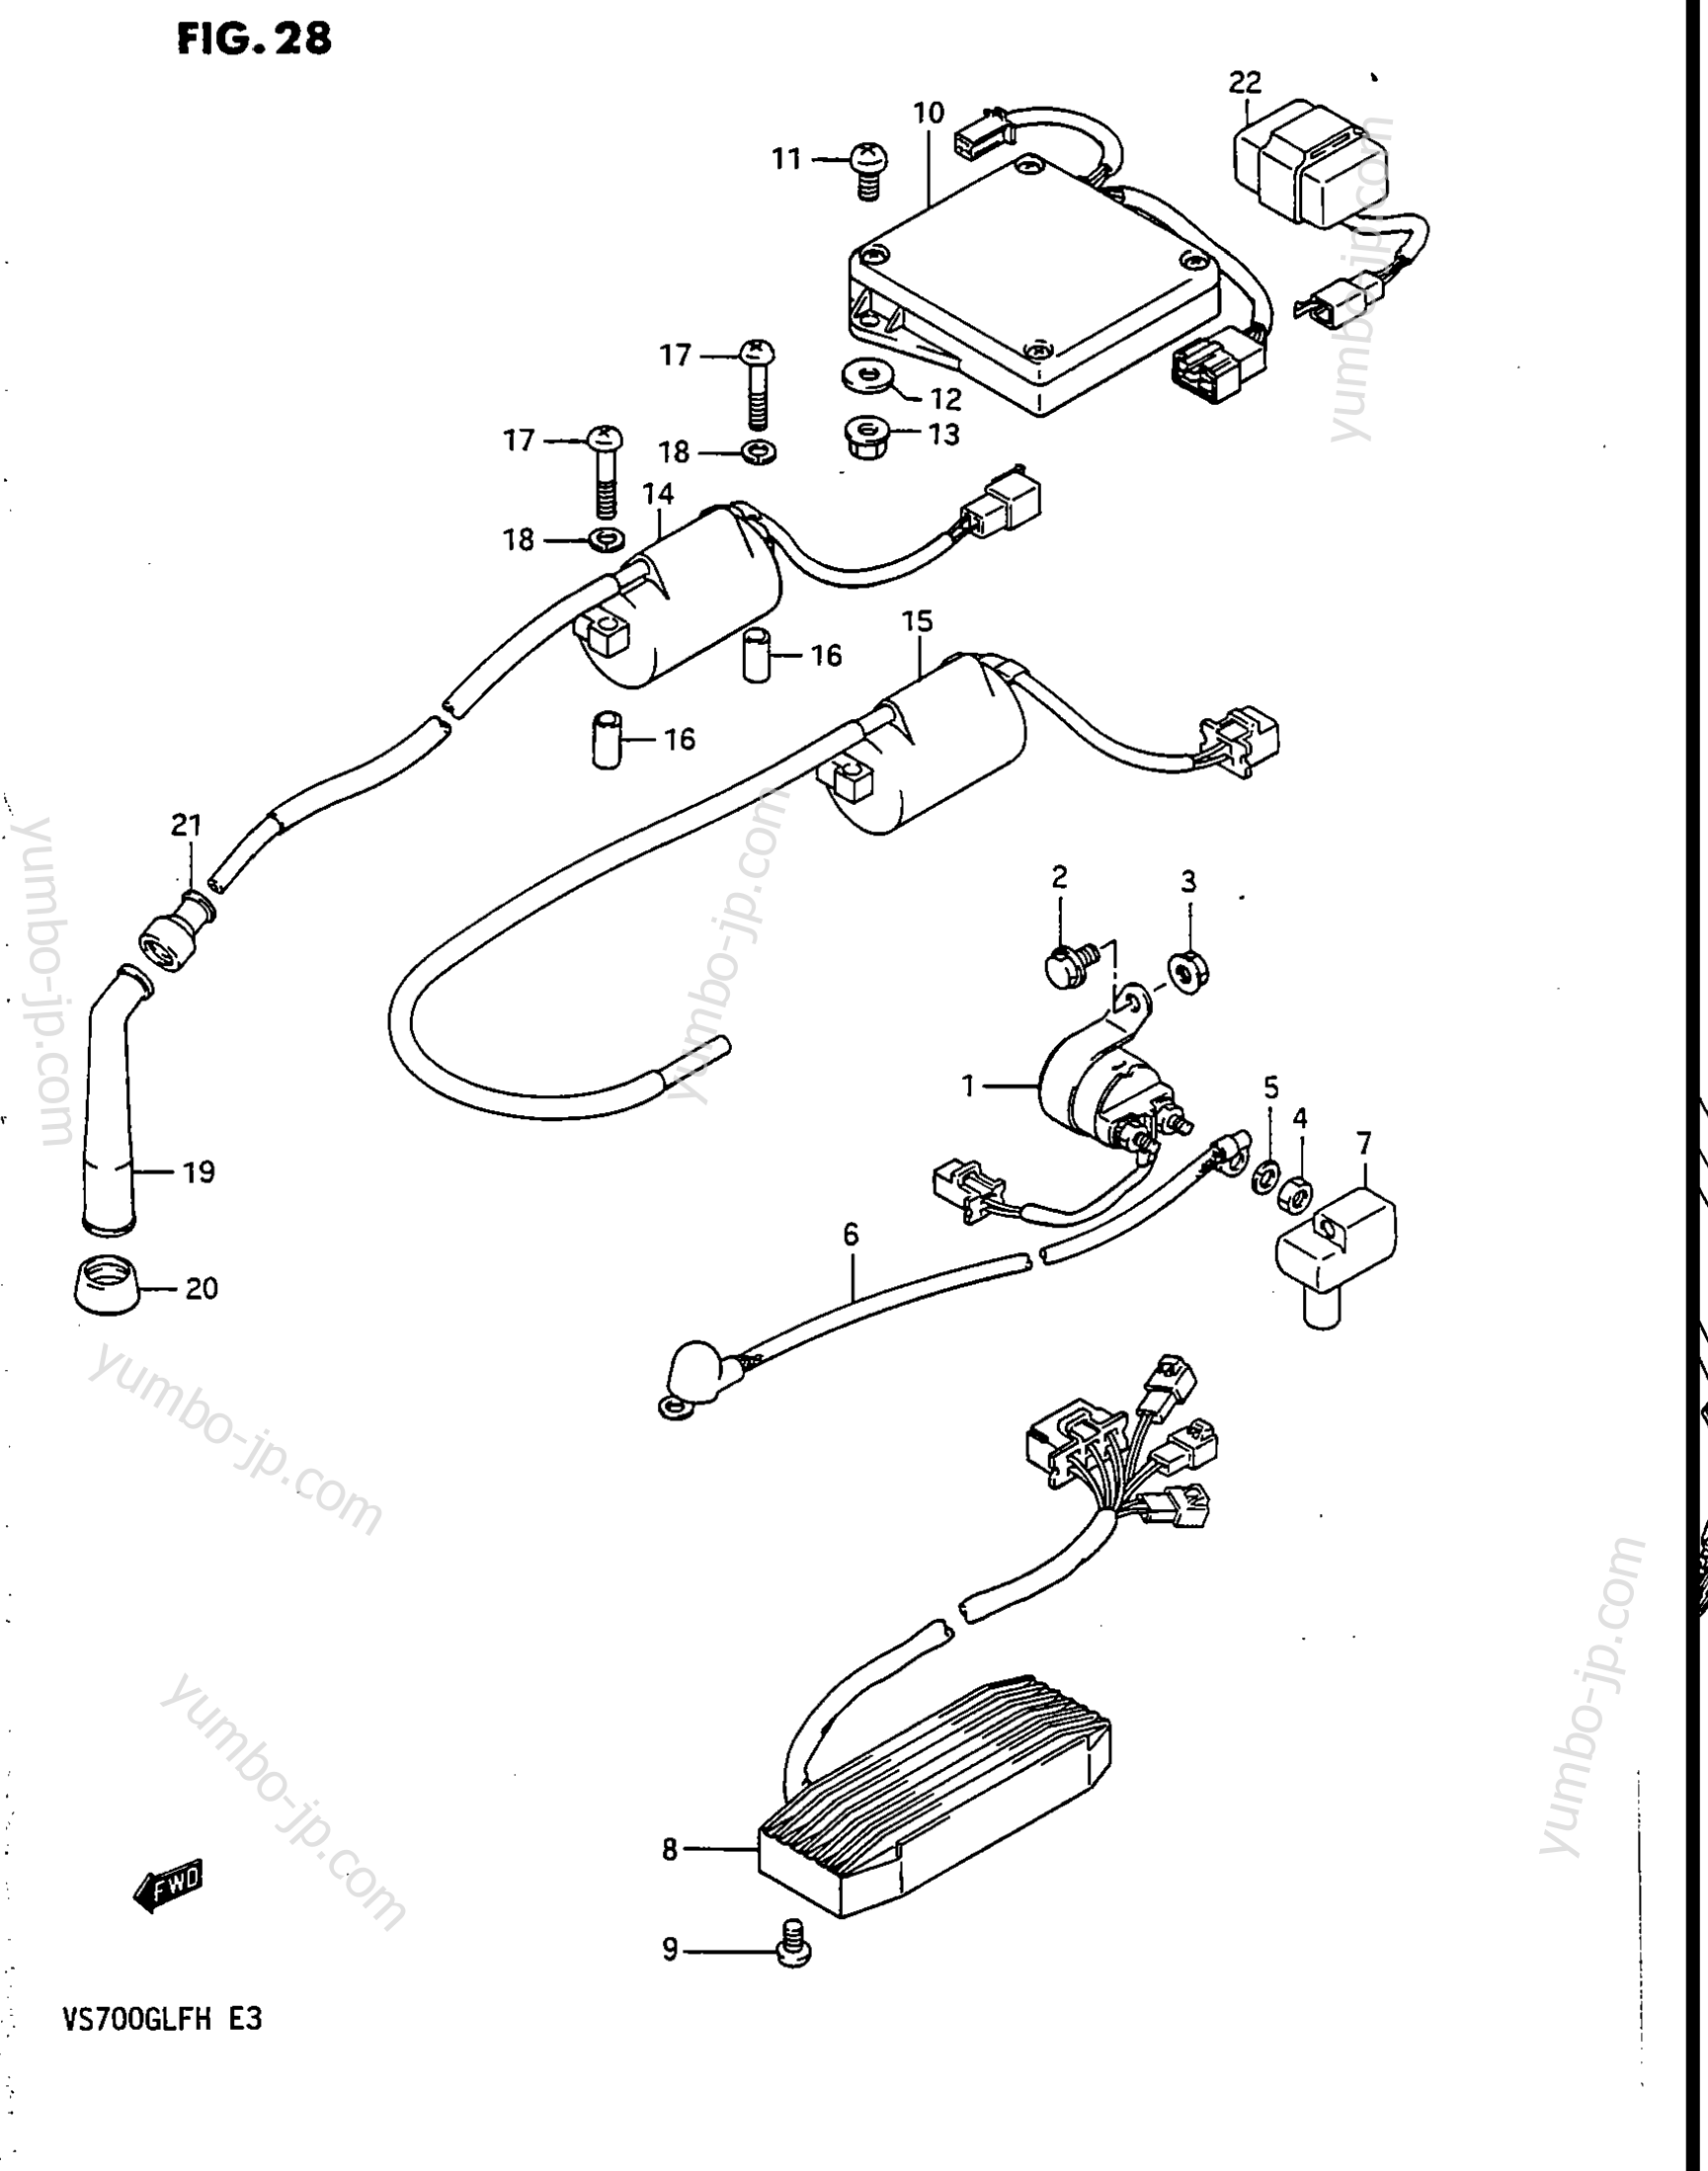 Electrical for motorcycles SUZUKI Intruder (VS700GLF) 1987 year